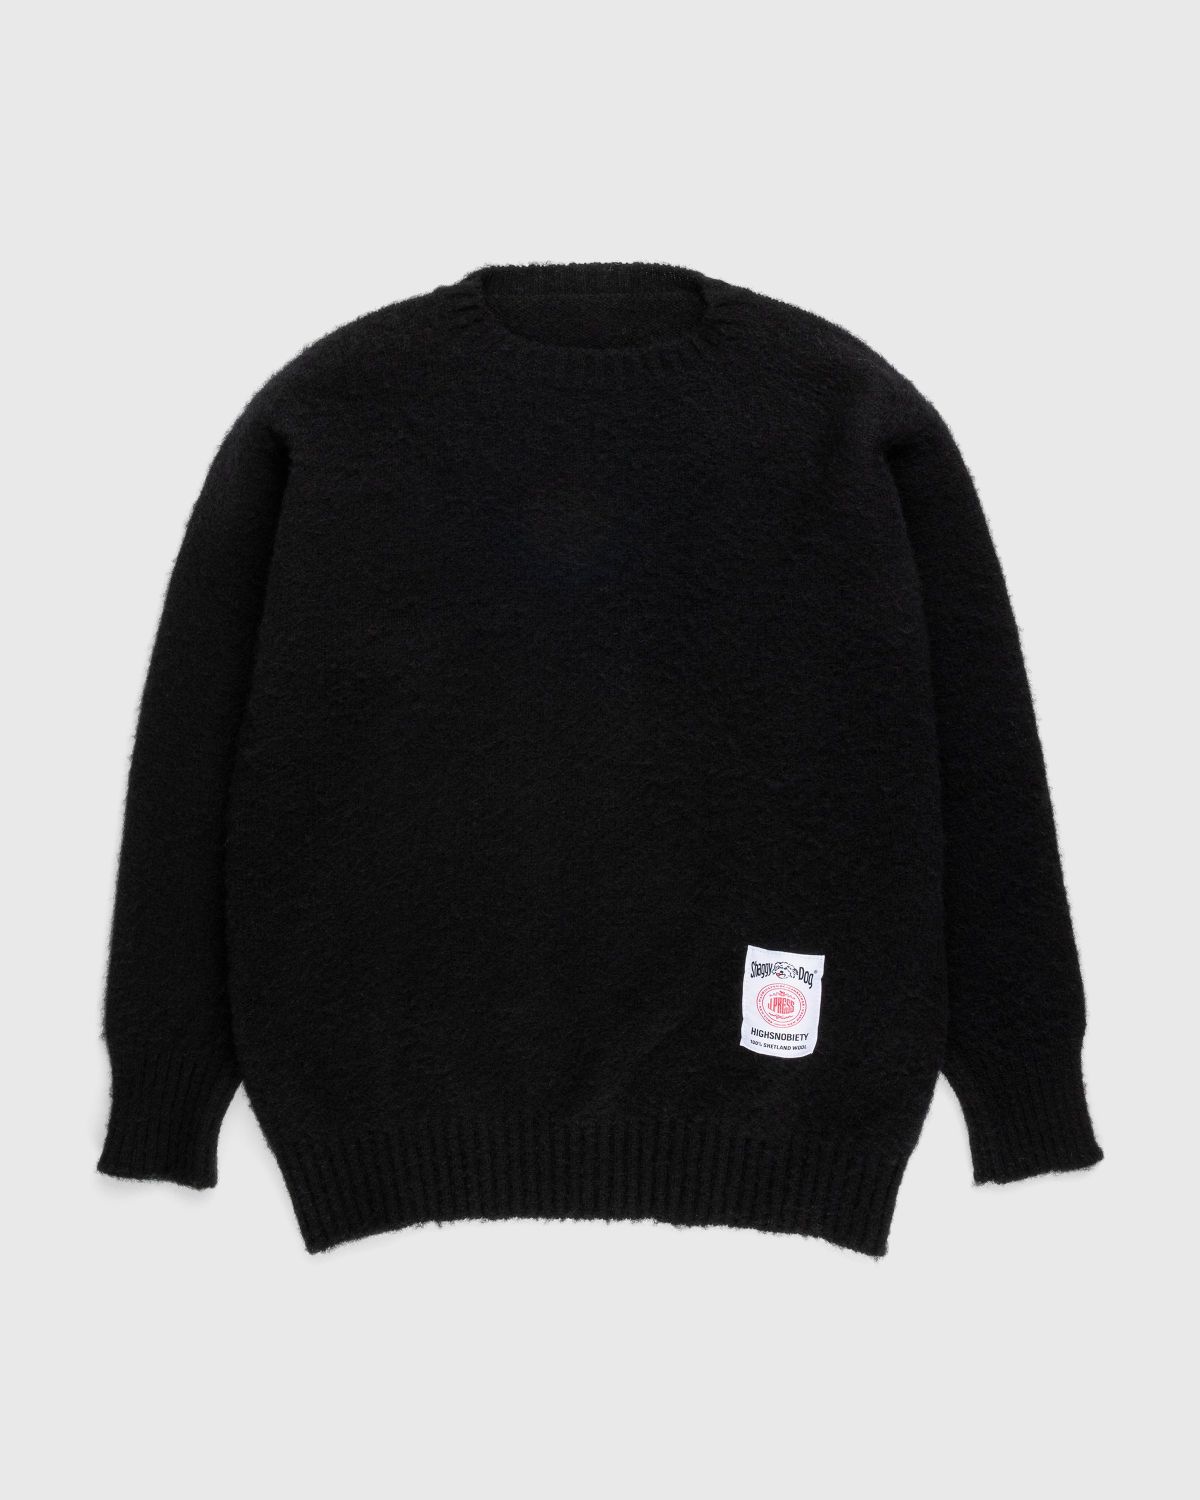 J. Press x Highsnobiety – Shaggy Dog Solid Sweater Black - Knitwear - Black - Image 1